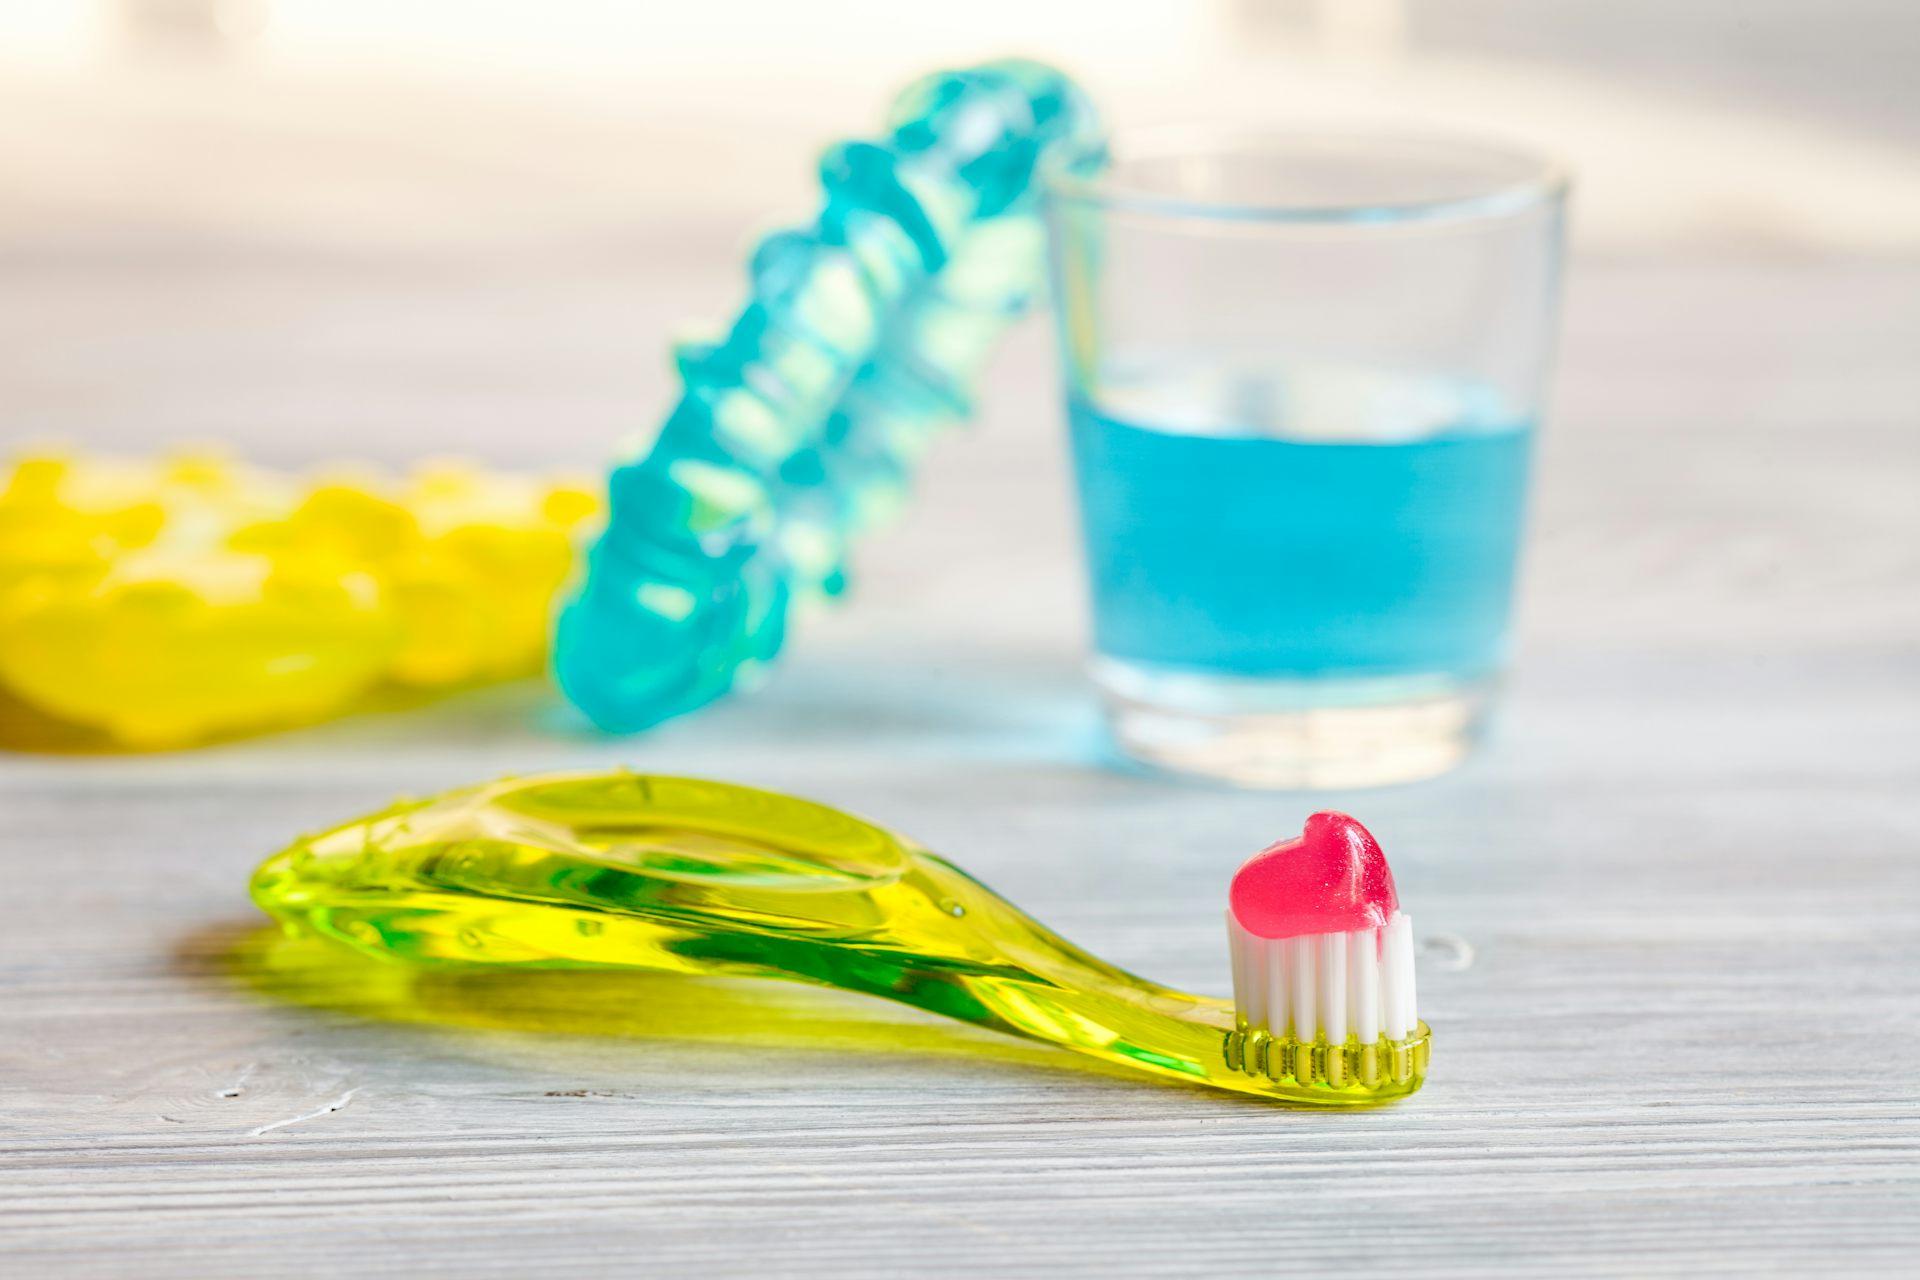 Aquafresh Tooth Brushing Chart